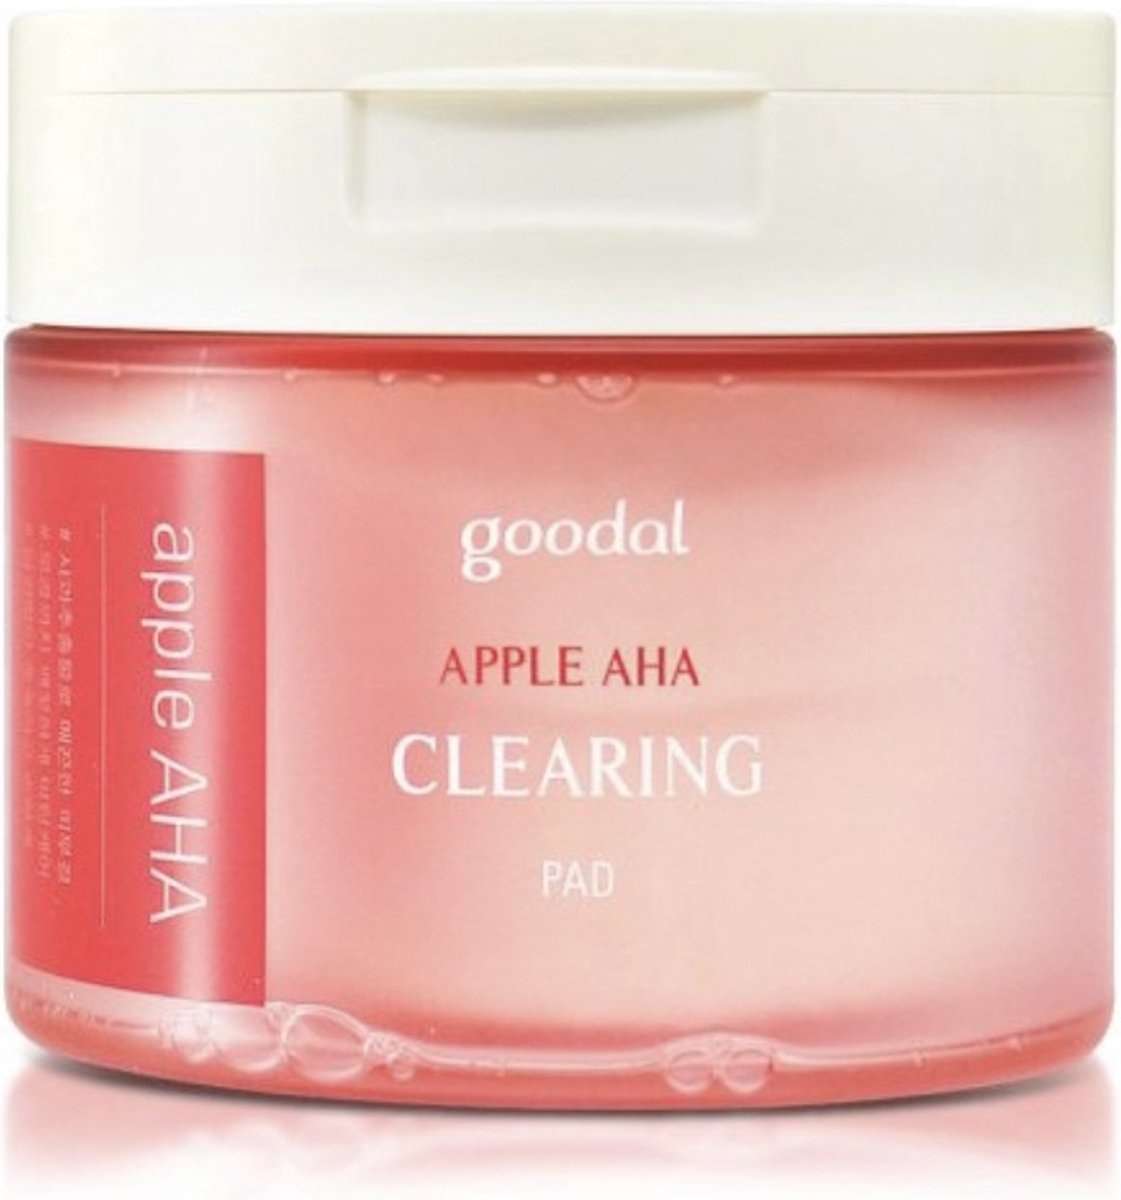 Goodal Apple AHA Clearing Pad 70pcs